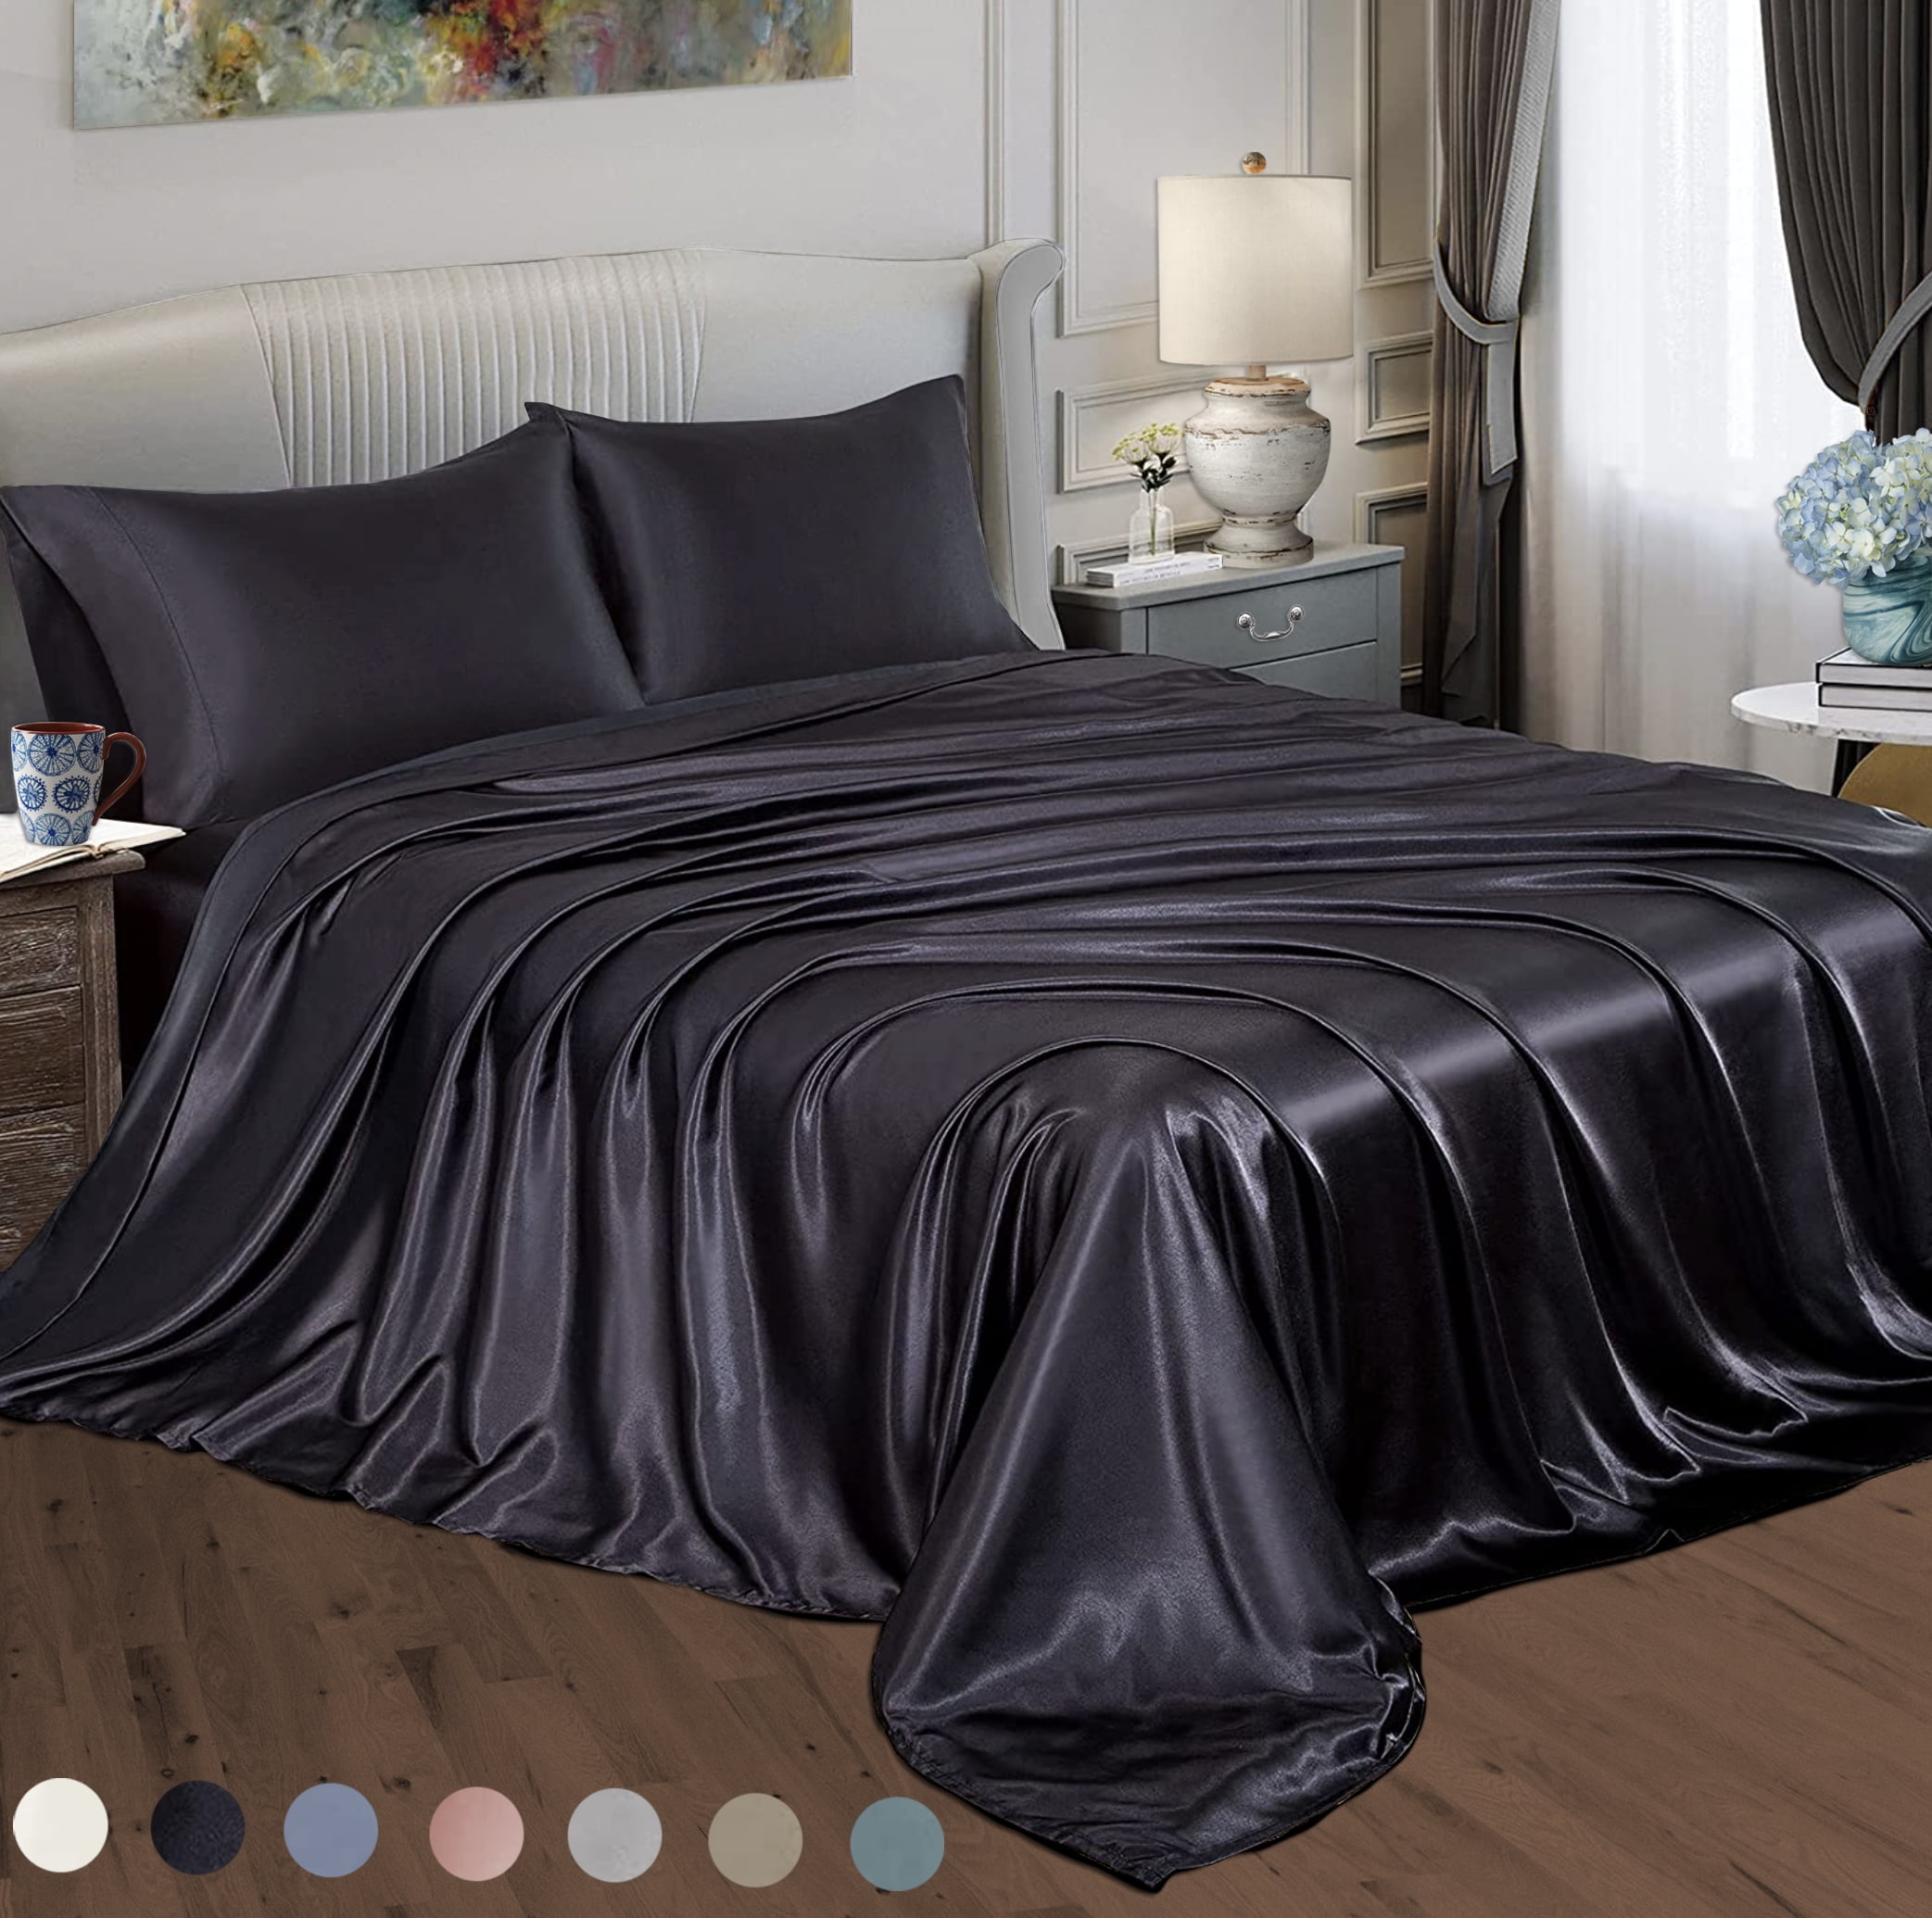 Grey Satin Sheets Queen Size Soft Silk Feel Bedding 4 Pcs Set Luxury Bed Linen 